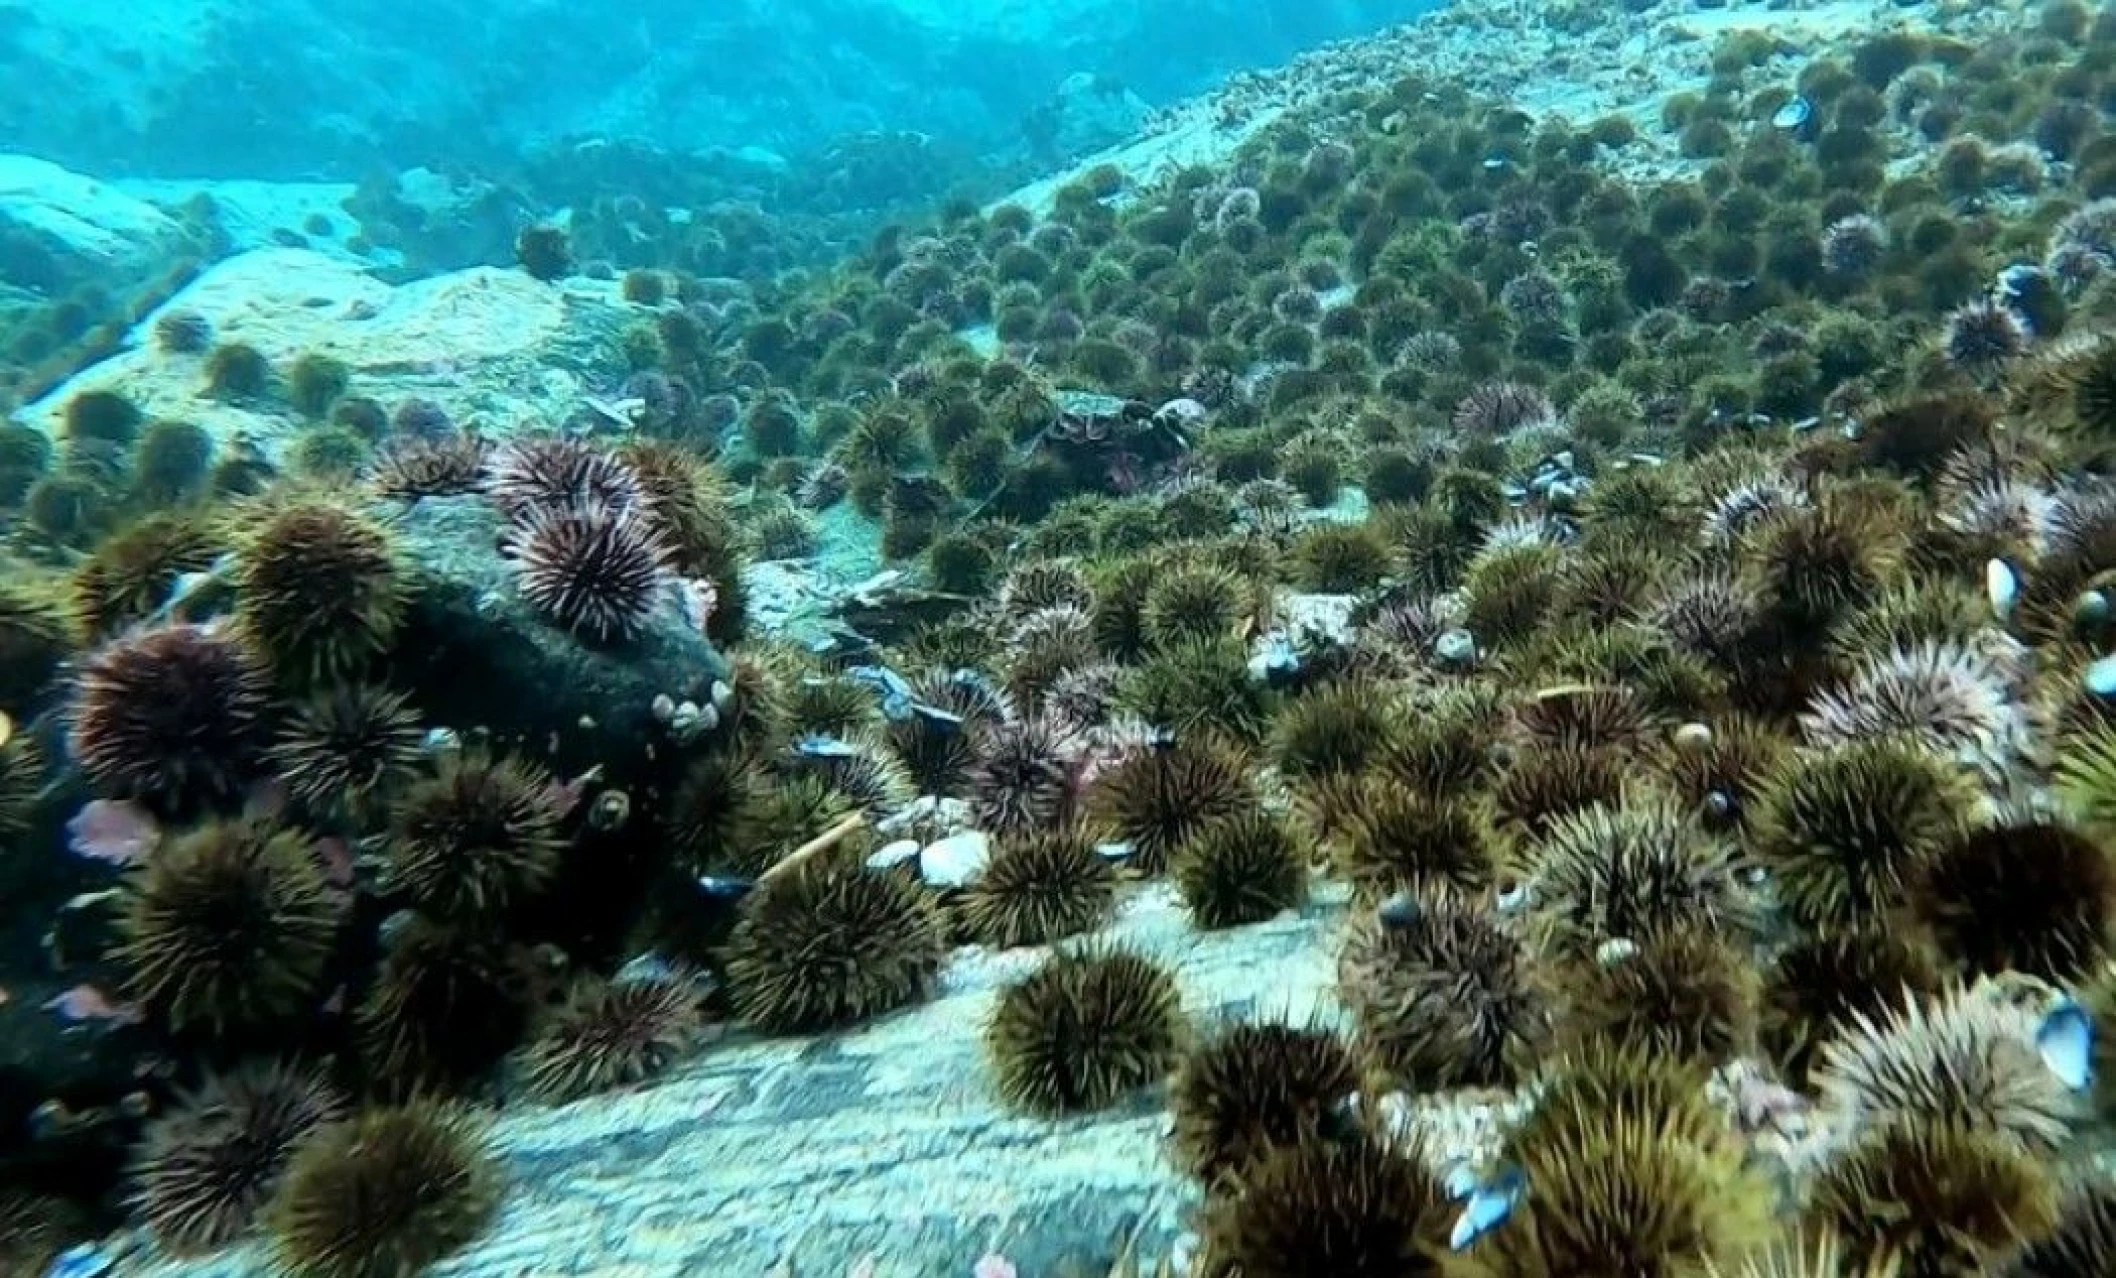 sea urchin farming